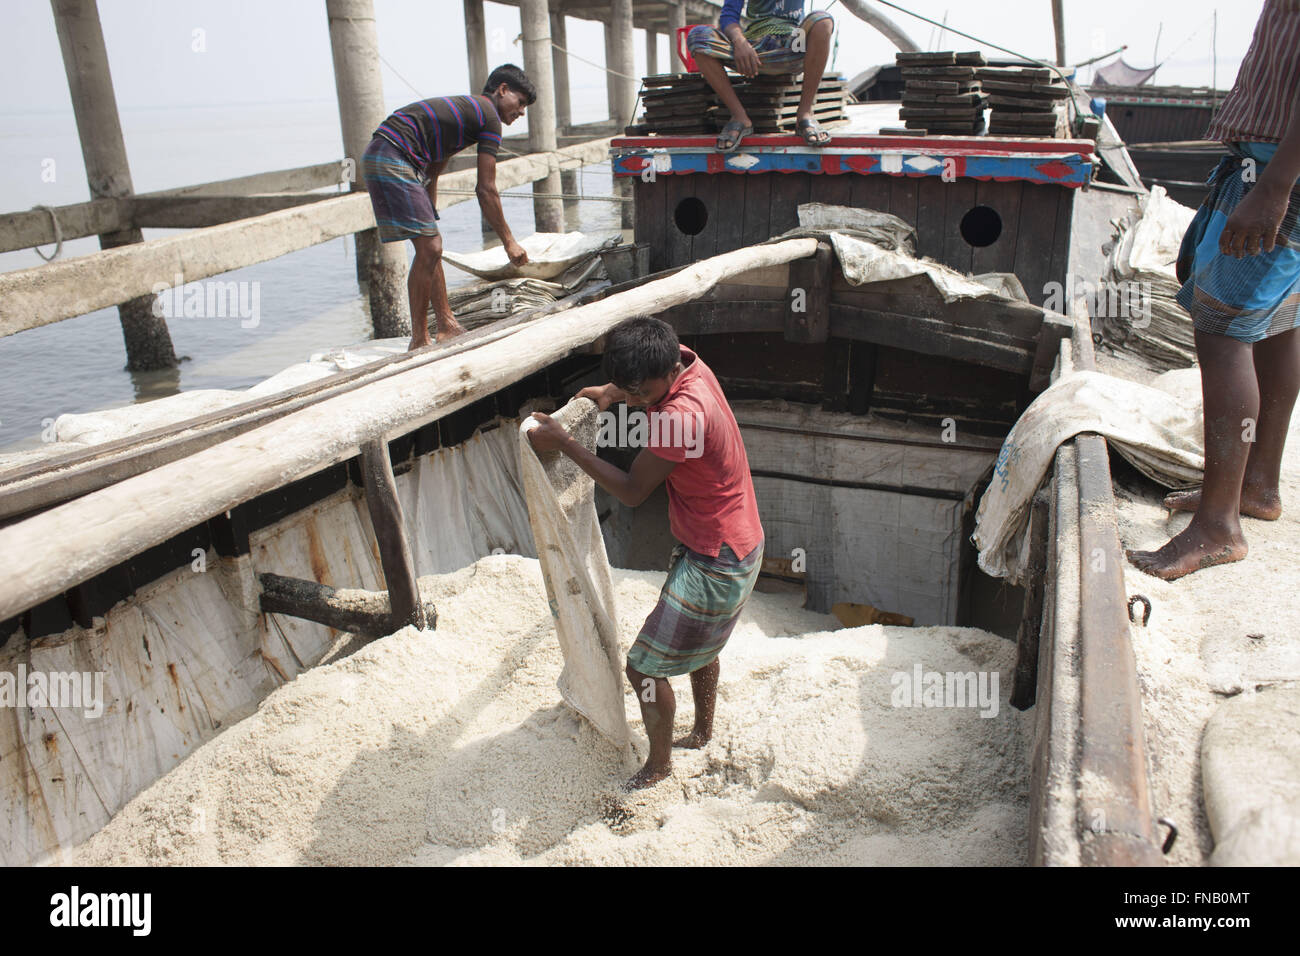 March 12, 2016 - Kutubdia, Bangladesh - Bangladeshi workers work in a boat loaded with salt at Kutubdia, around 400 Kilometers away from Dhaka, Bangladesh. (Credit Image: © Suvra Kanti Das via ZUMA Wire) Stock Photo